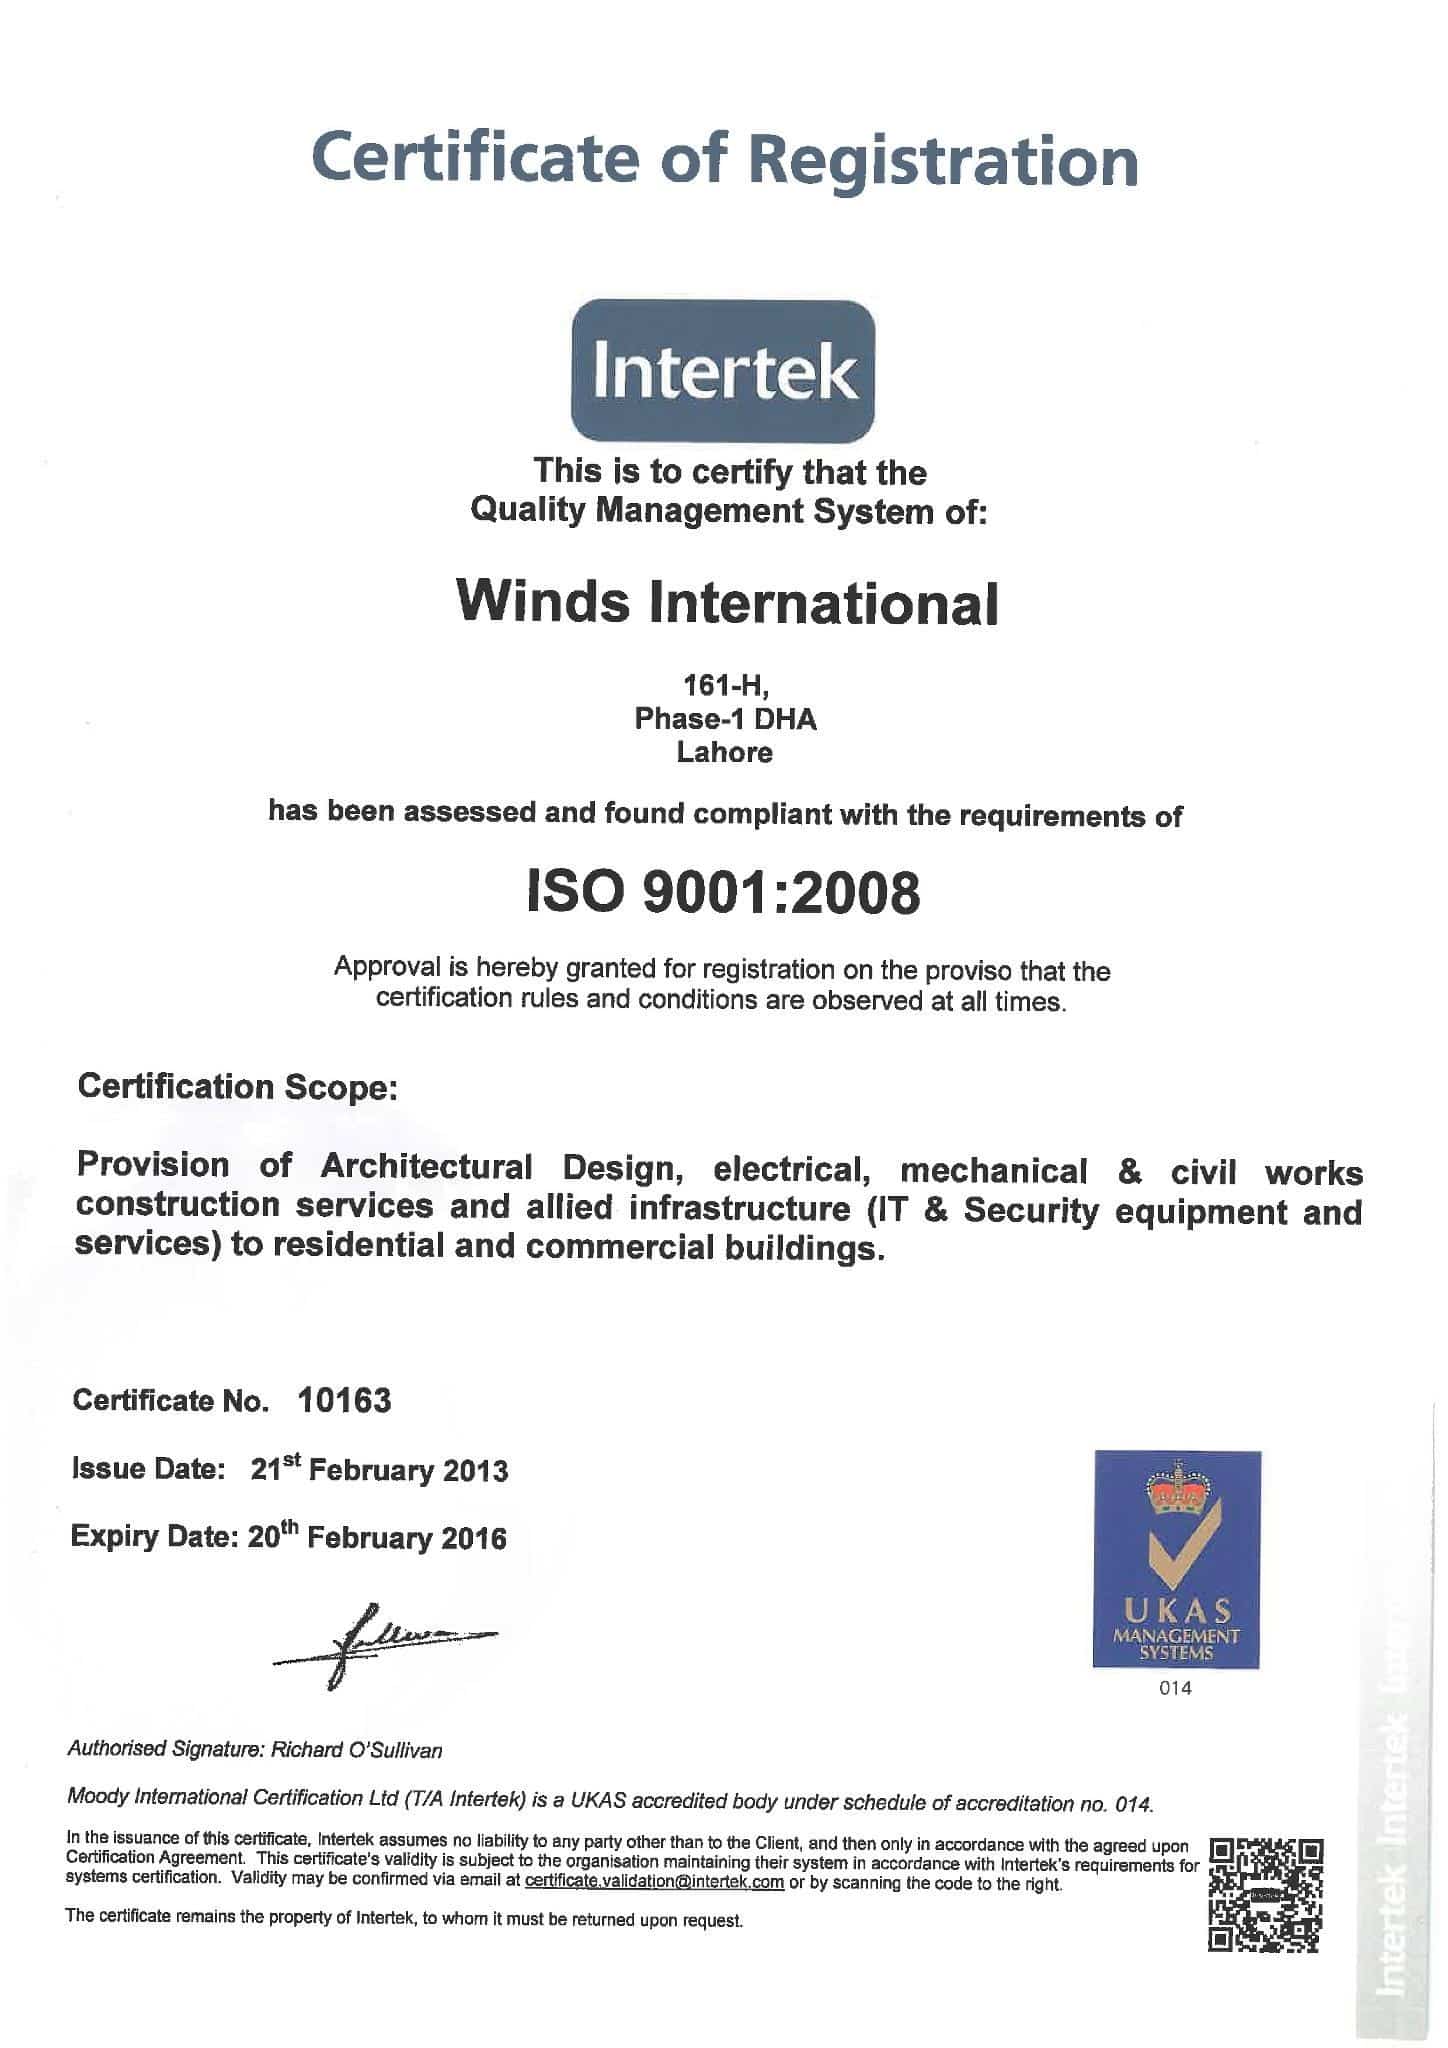 QMS ISO 9001-2008 Winds International